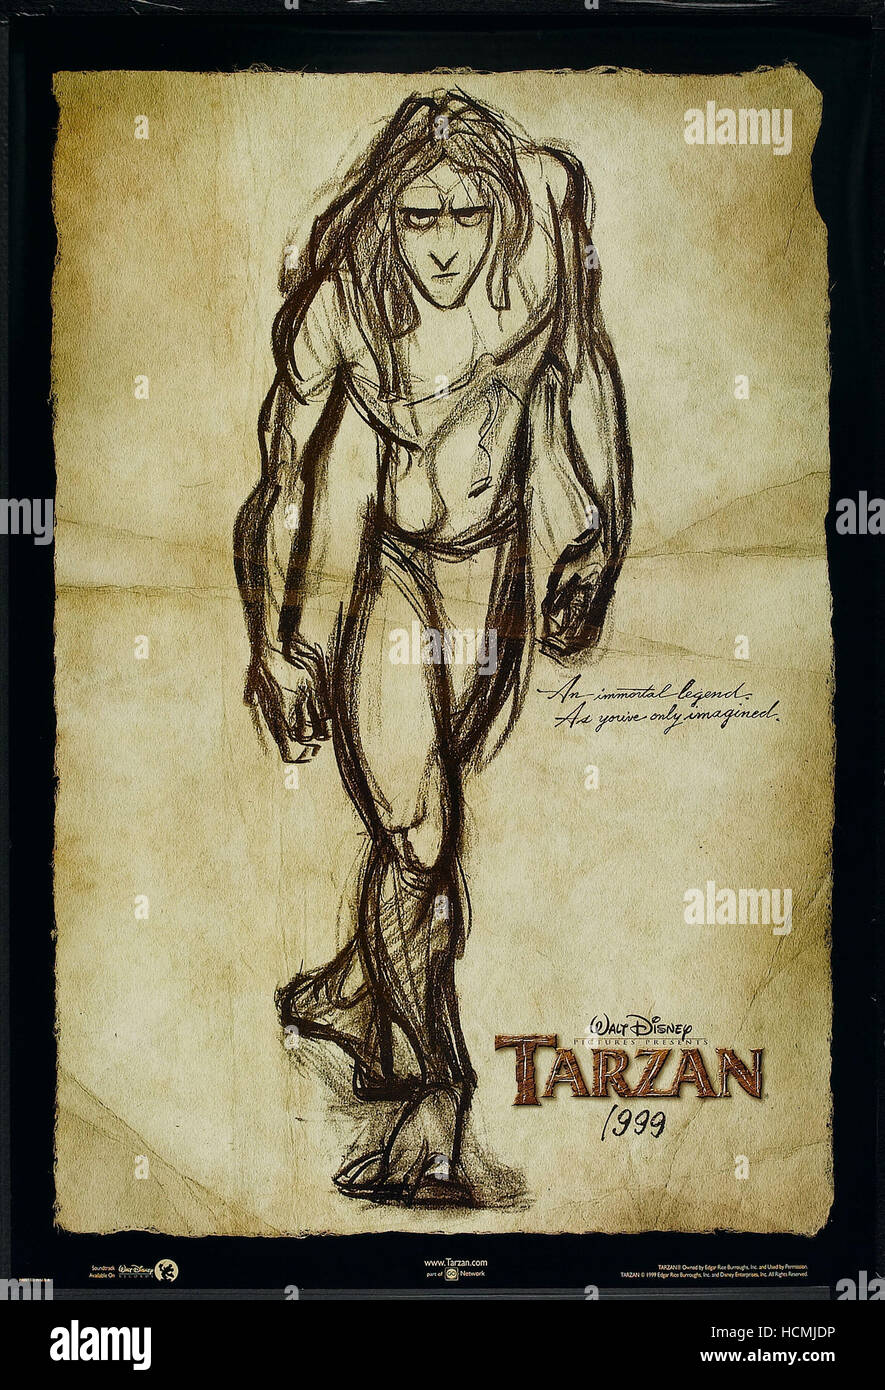 TARZAN, Tarzan on advance poster art, 1999, ©Walt Disney Pictures/courtesy Everett Collection Stock Photo